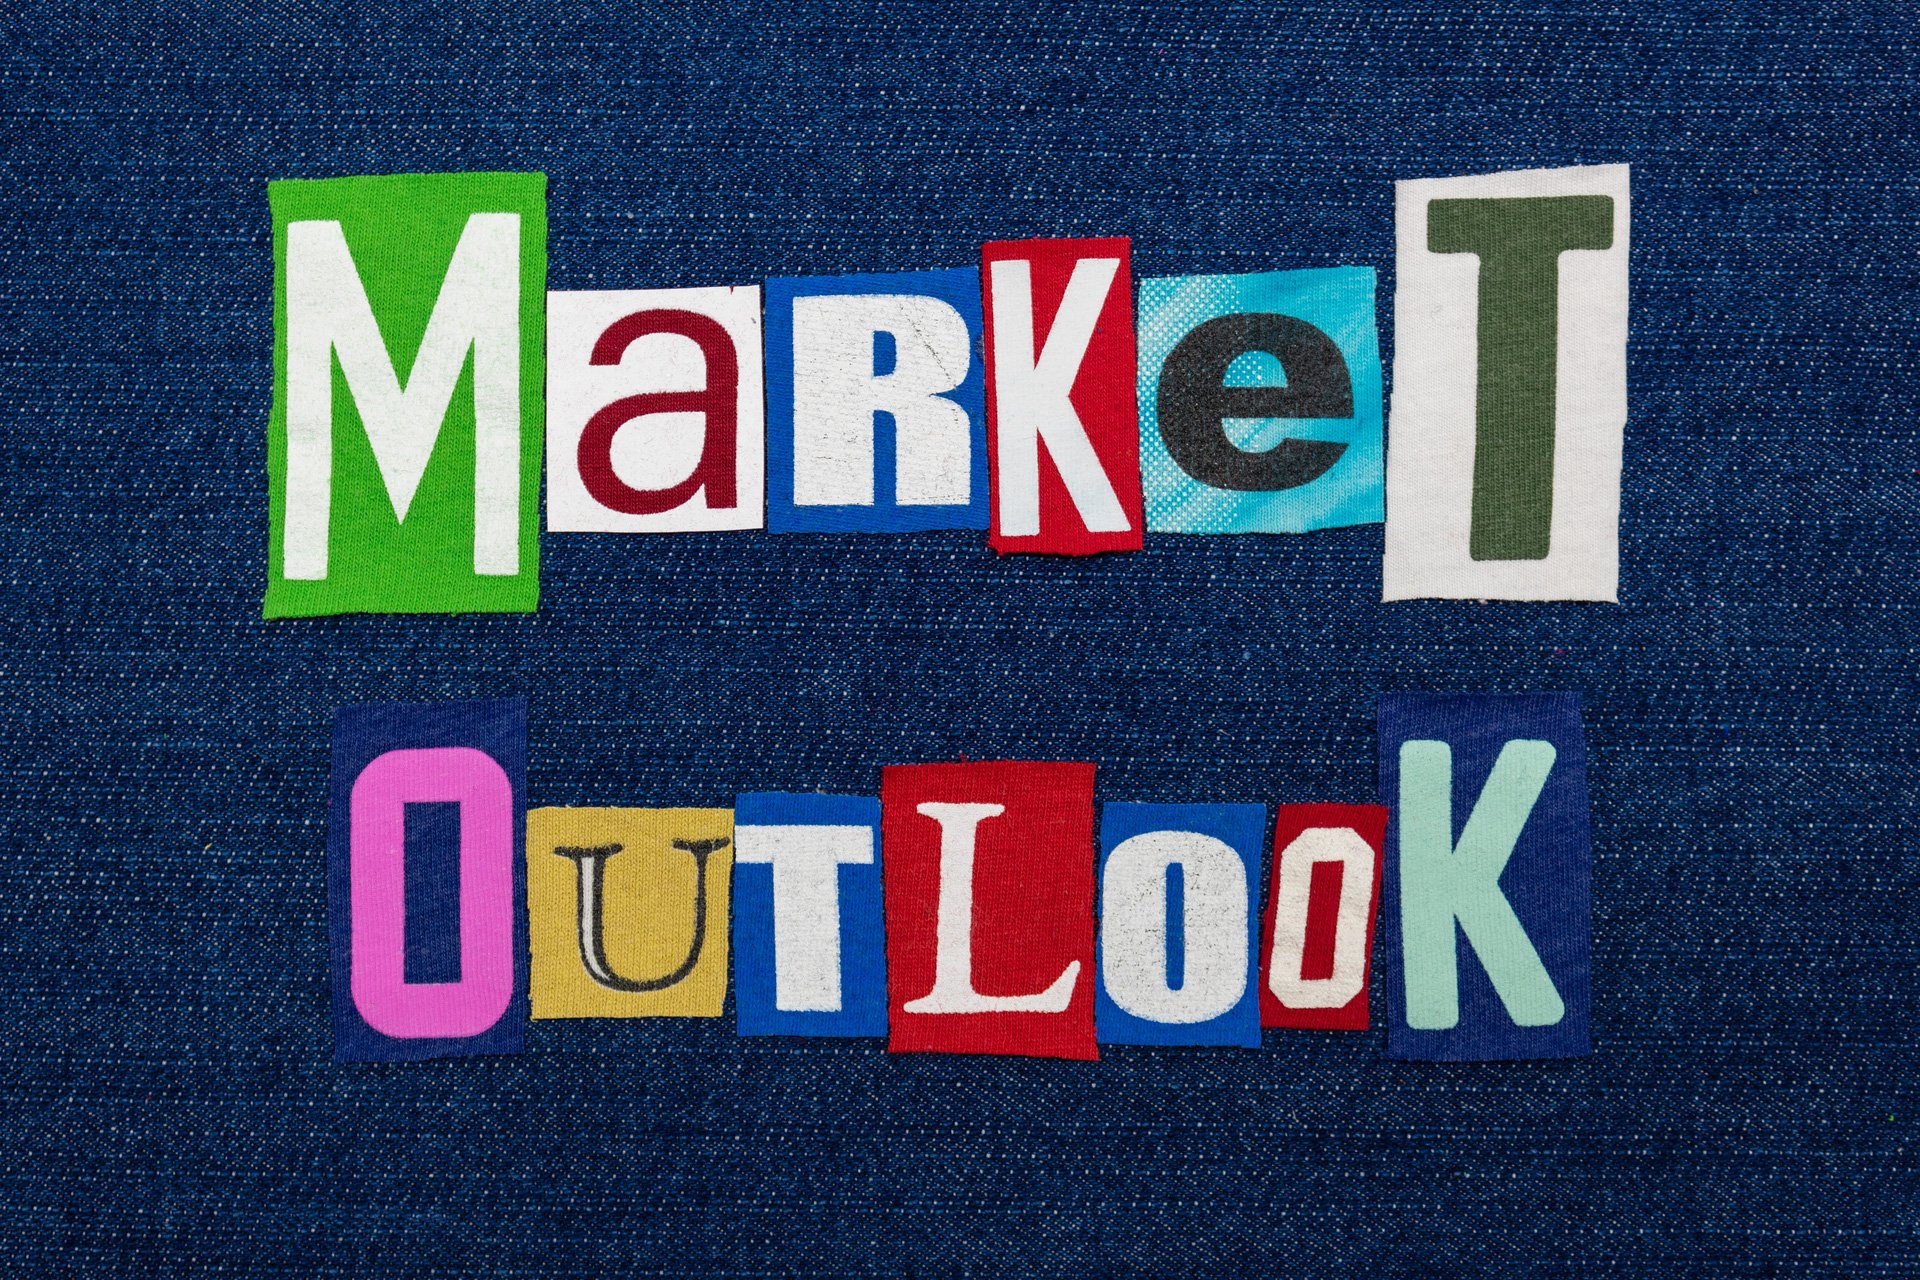 market outlook